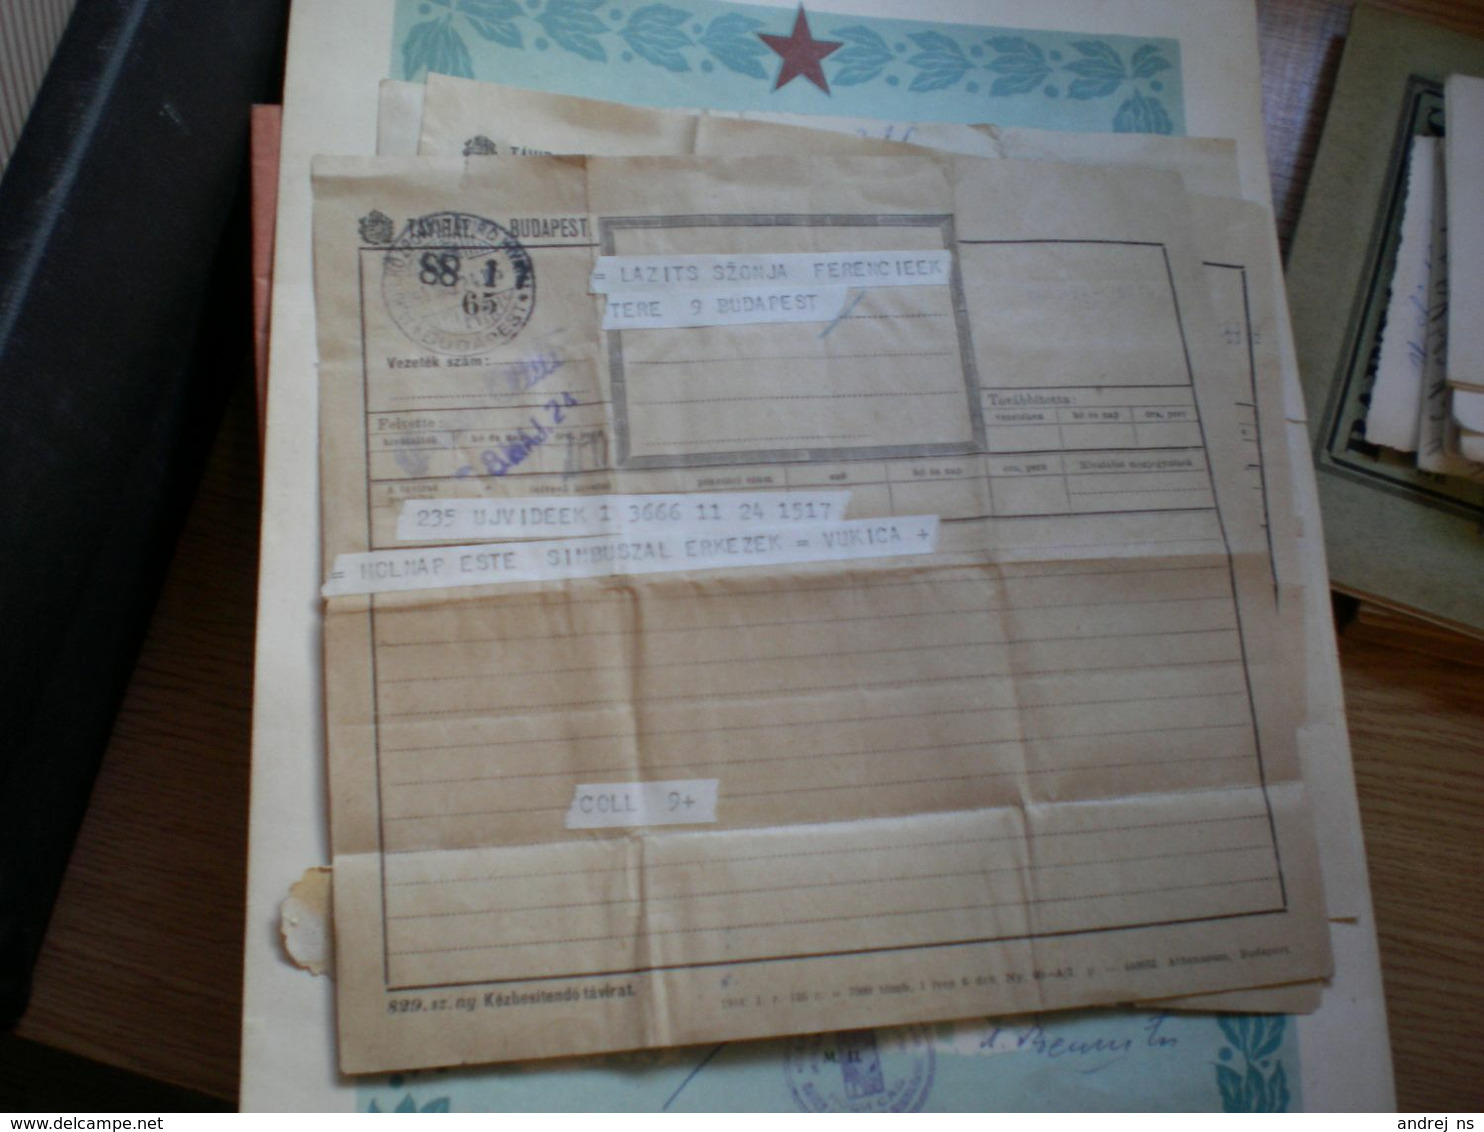 Telegram Tavirat Budapest  To Ujvidek Novi Sad 1944 WW2 - Telegraphenmarken